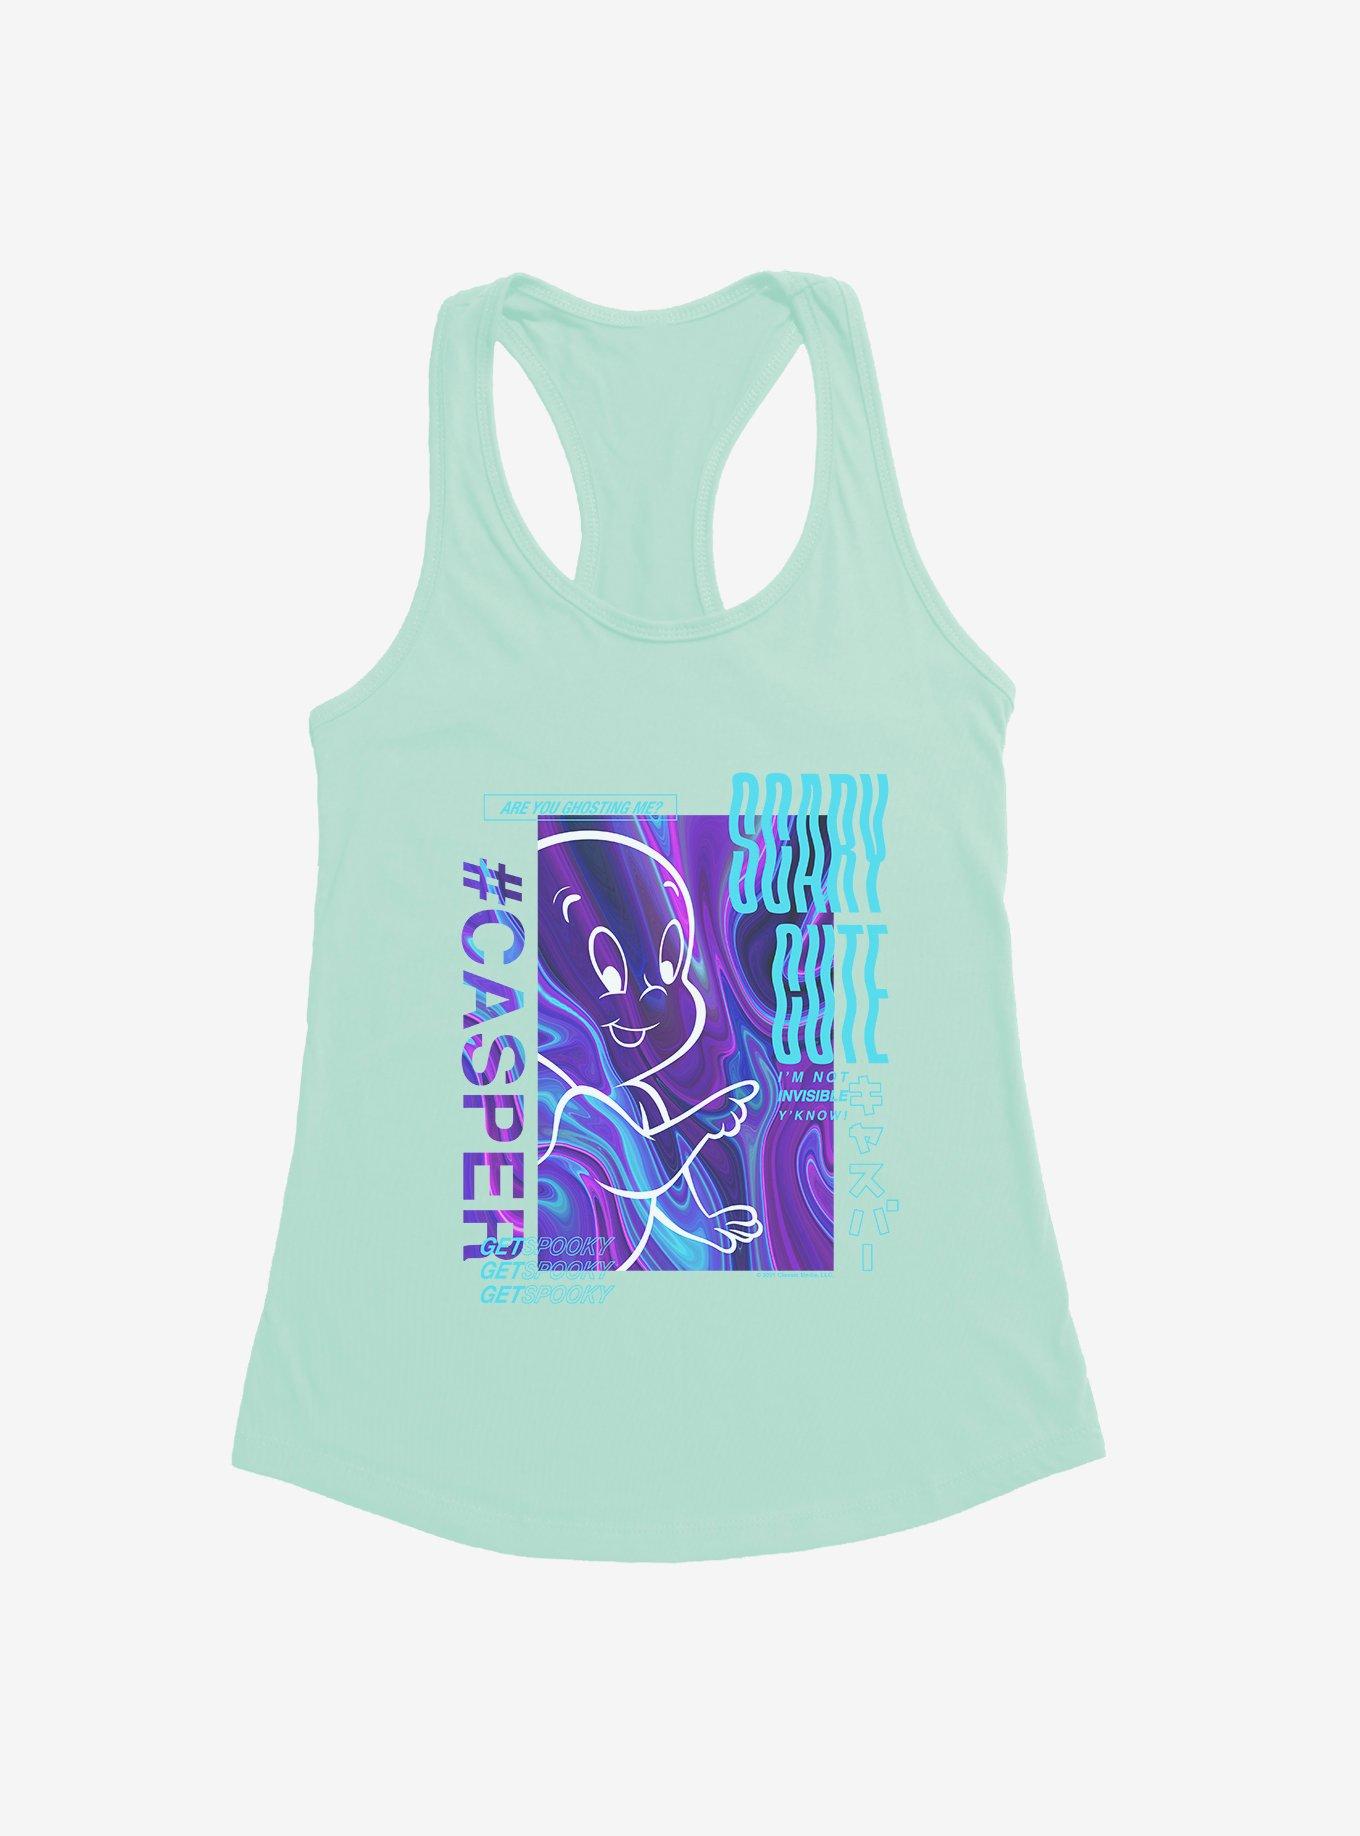 Casper The Friendly Ghost Virtual Raver Scary Cute Girls Tank, MINT, hi-res